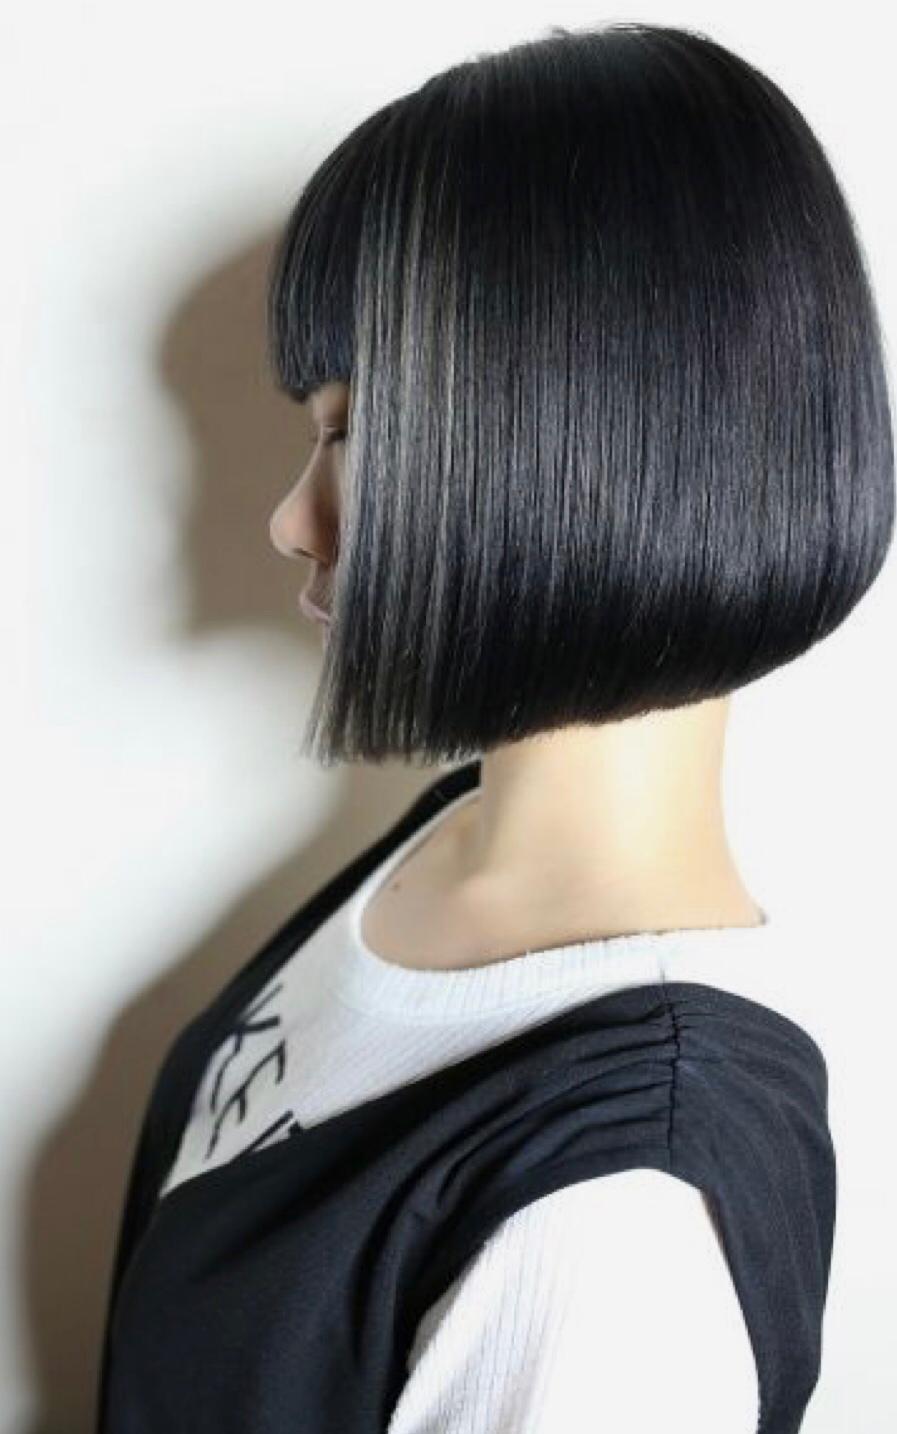  I do Hair ®之髮型作品: ❤ 包括負離子直髮、梨花頭、韓式曲髮、上直下彎 ❤